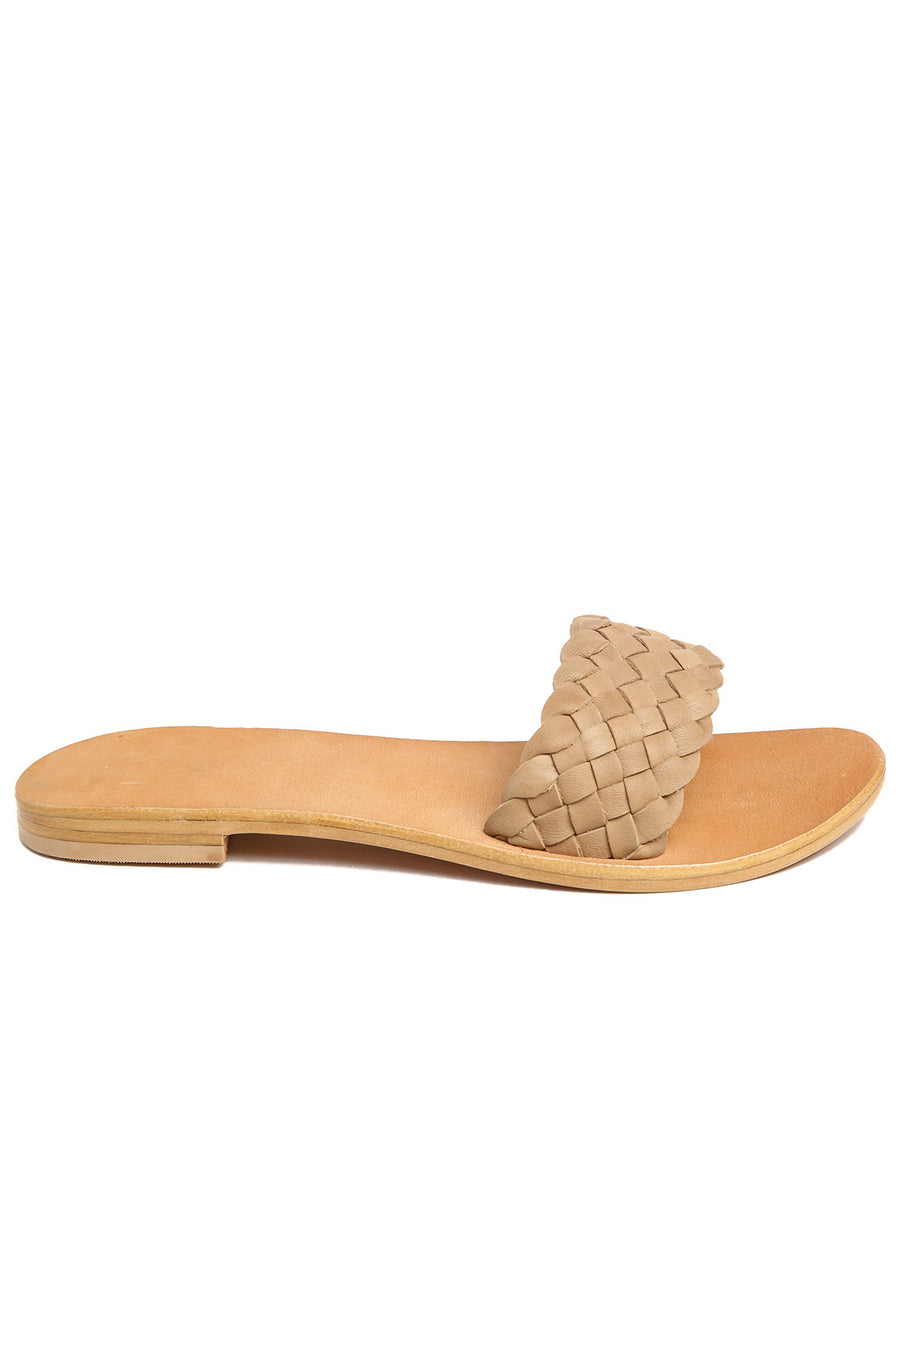 Malibu Natural Braided Leather Slide Sandal Front